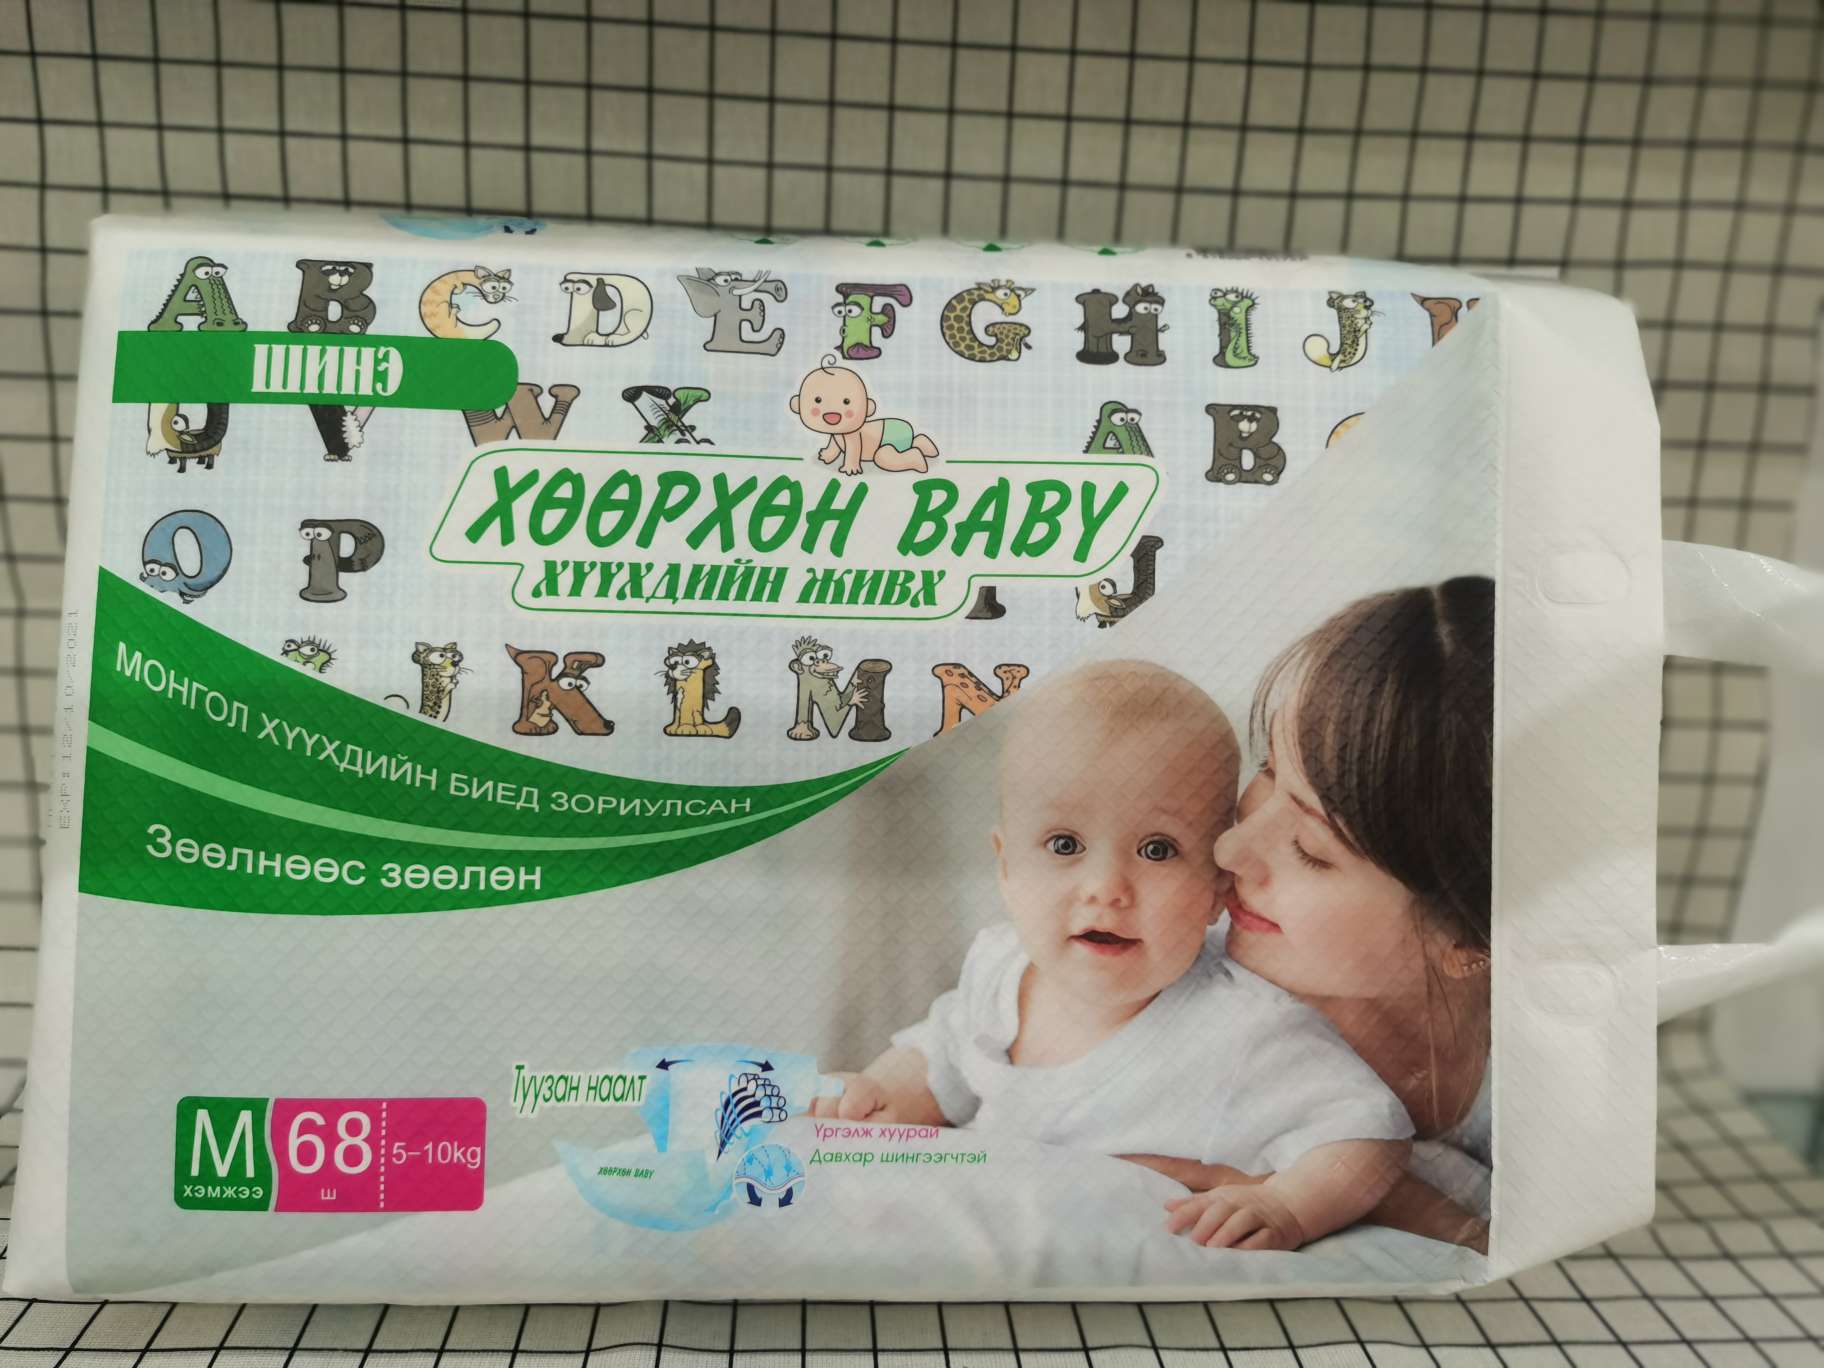 baby diaper :
M 68 pcs
电联订做详情图1